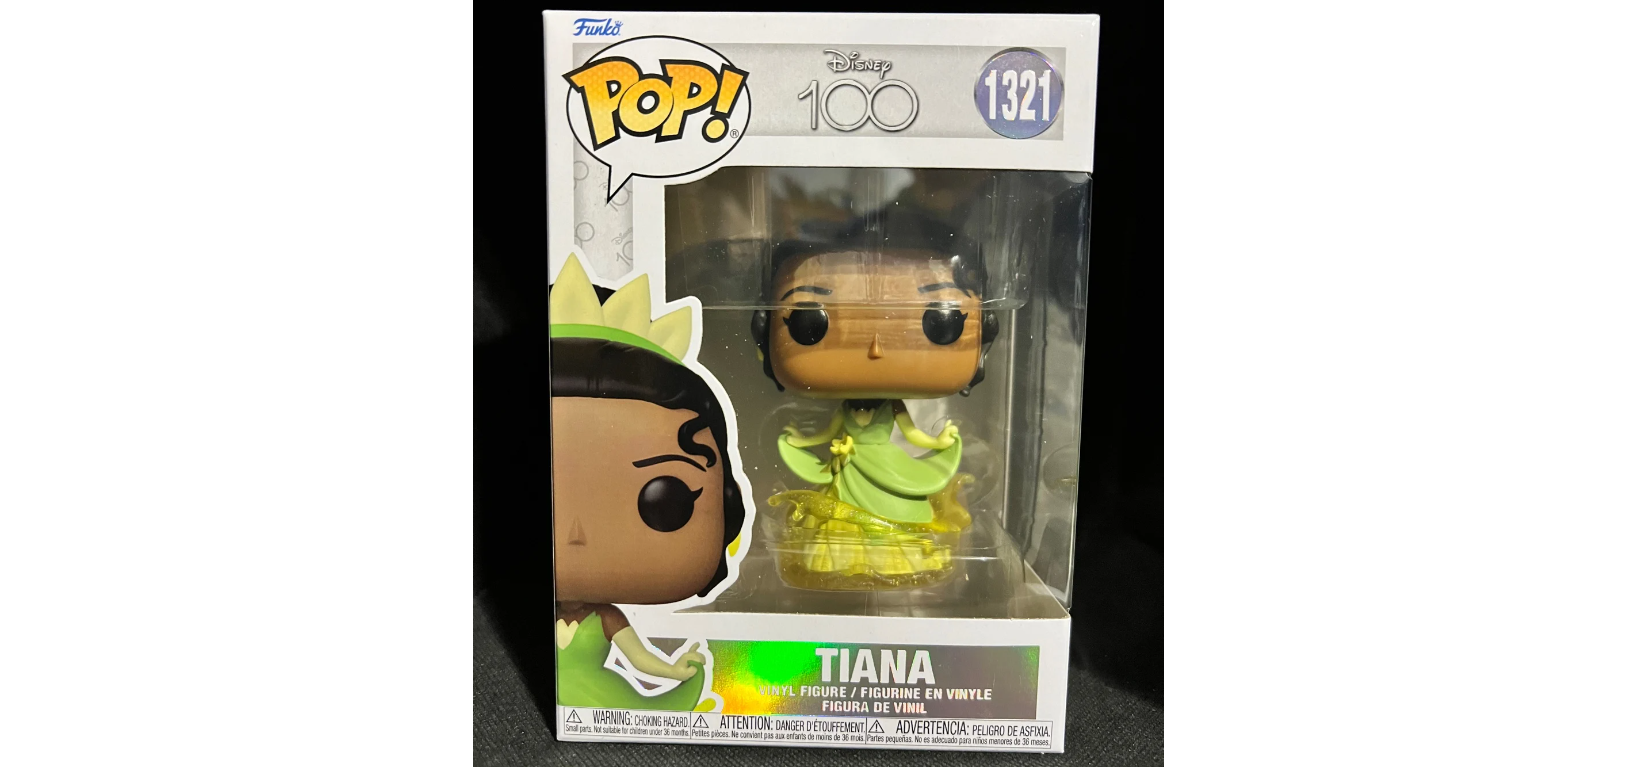 Funko Pop! The Princess and the Frog - Tiana Ultimate Disney Princess